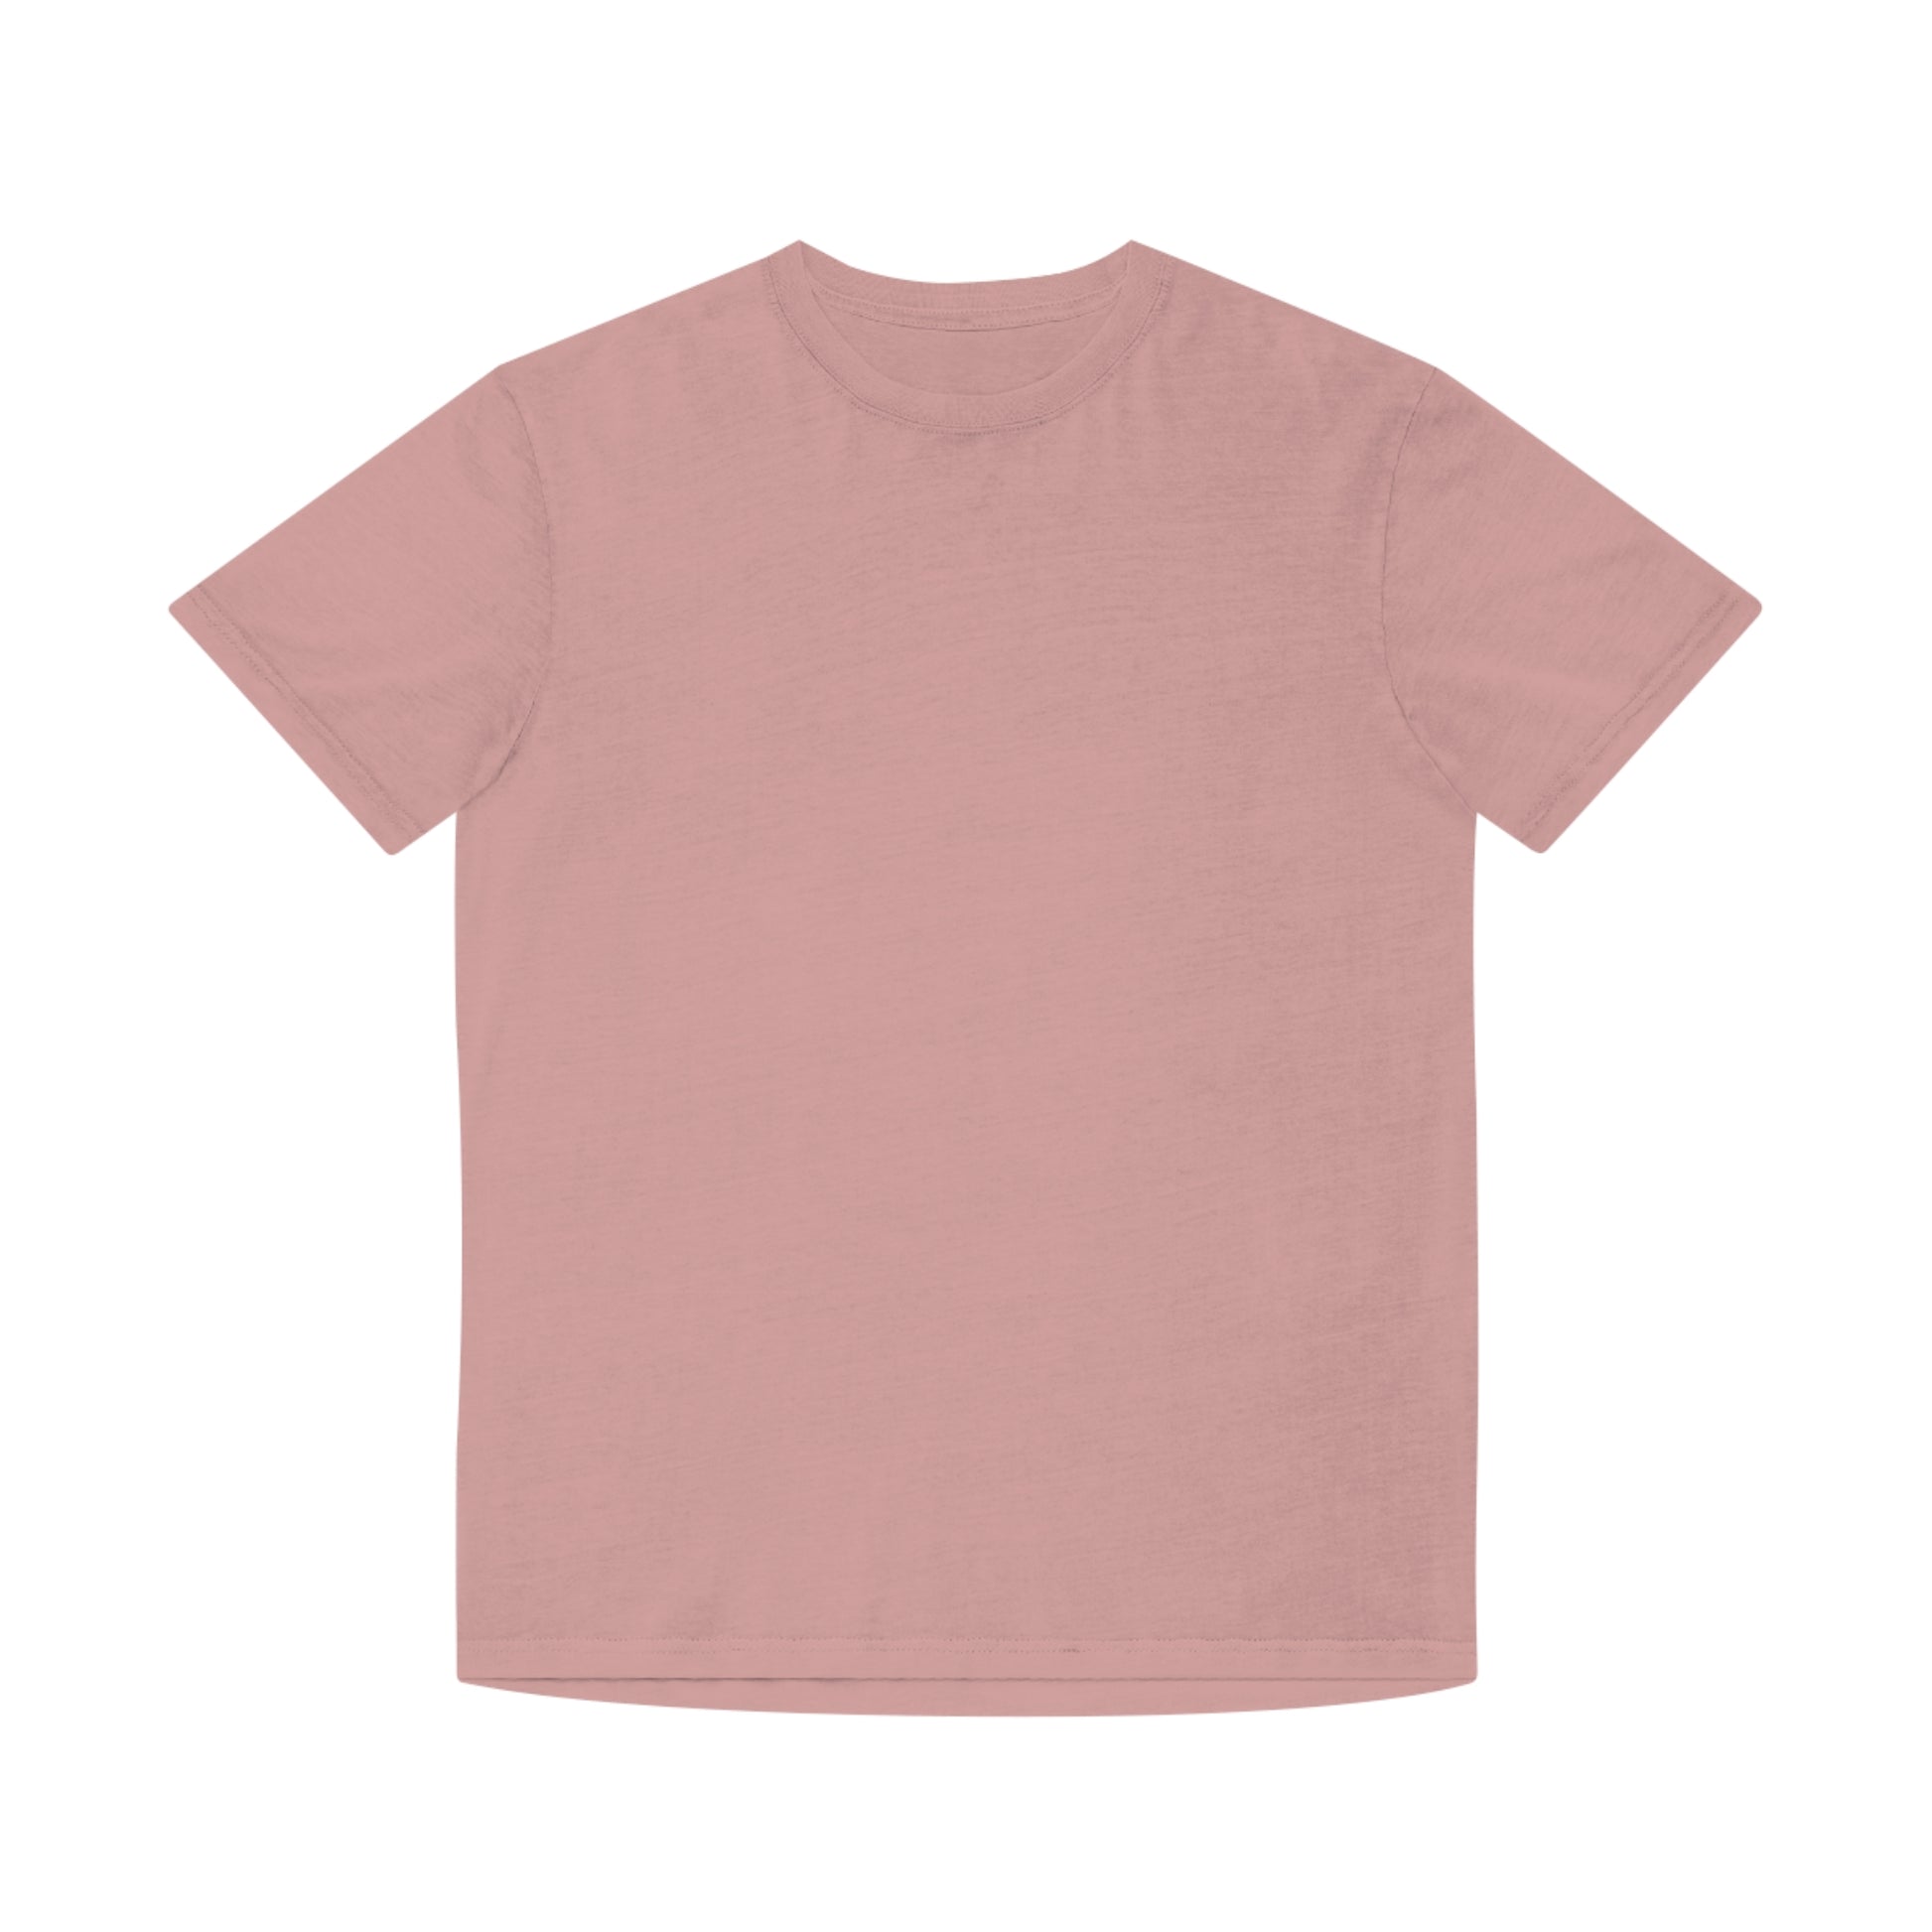 Faded Rose Tshirt Australian Printer